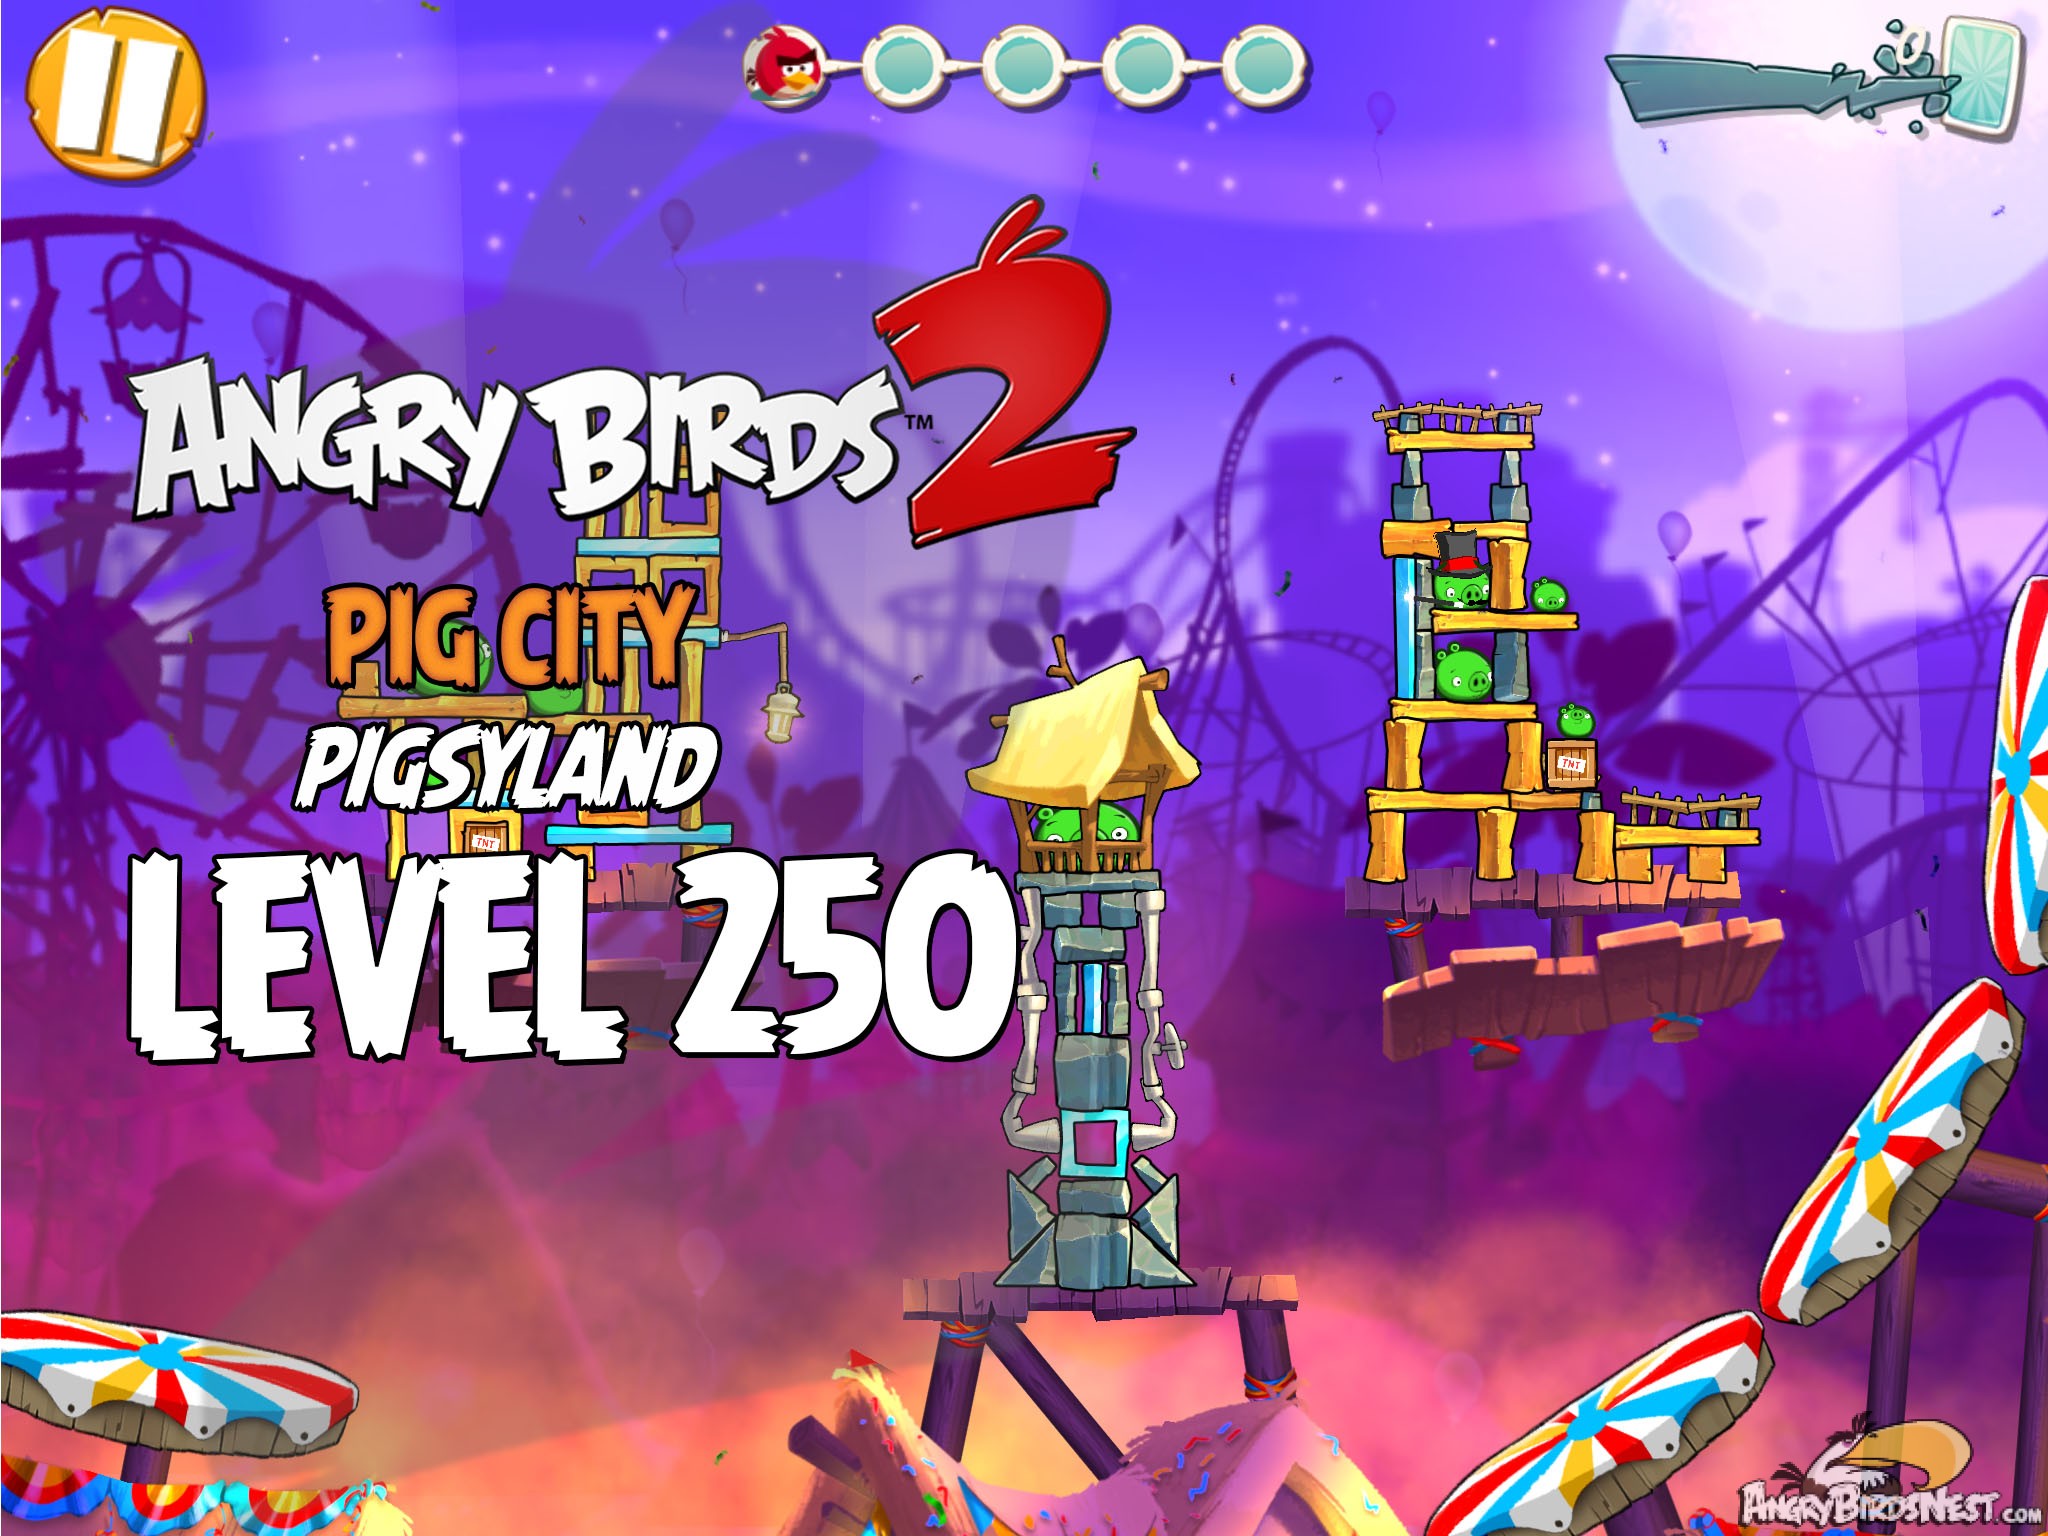 Angry Birds 2 Pig City Pigsyland Level 250